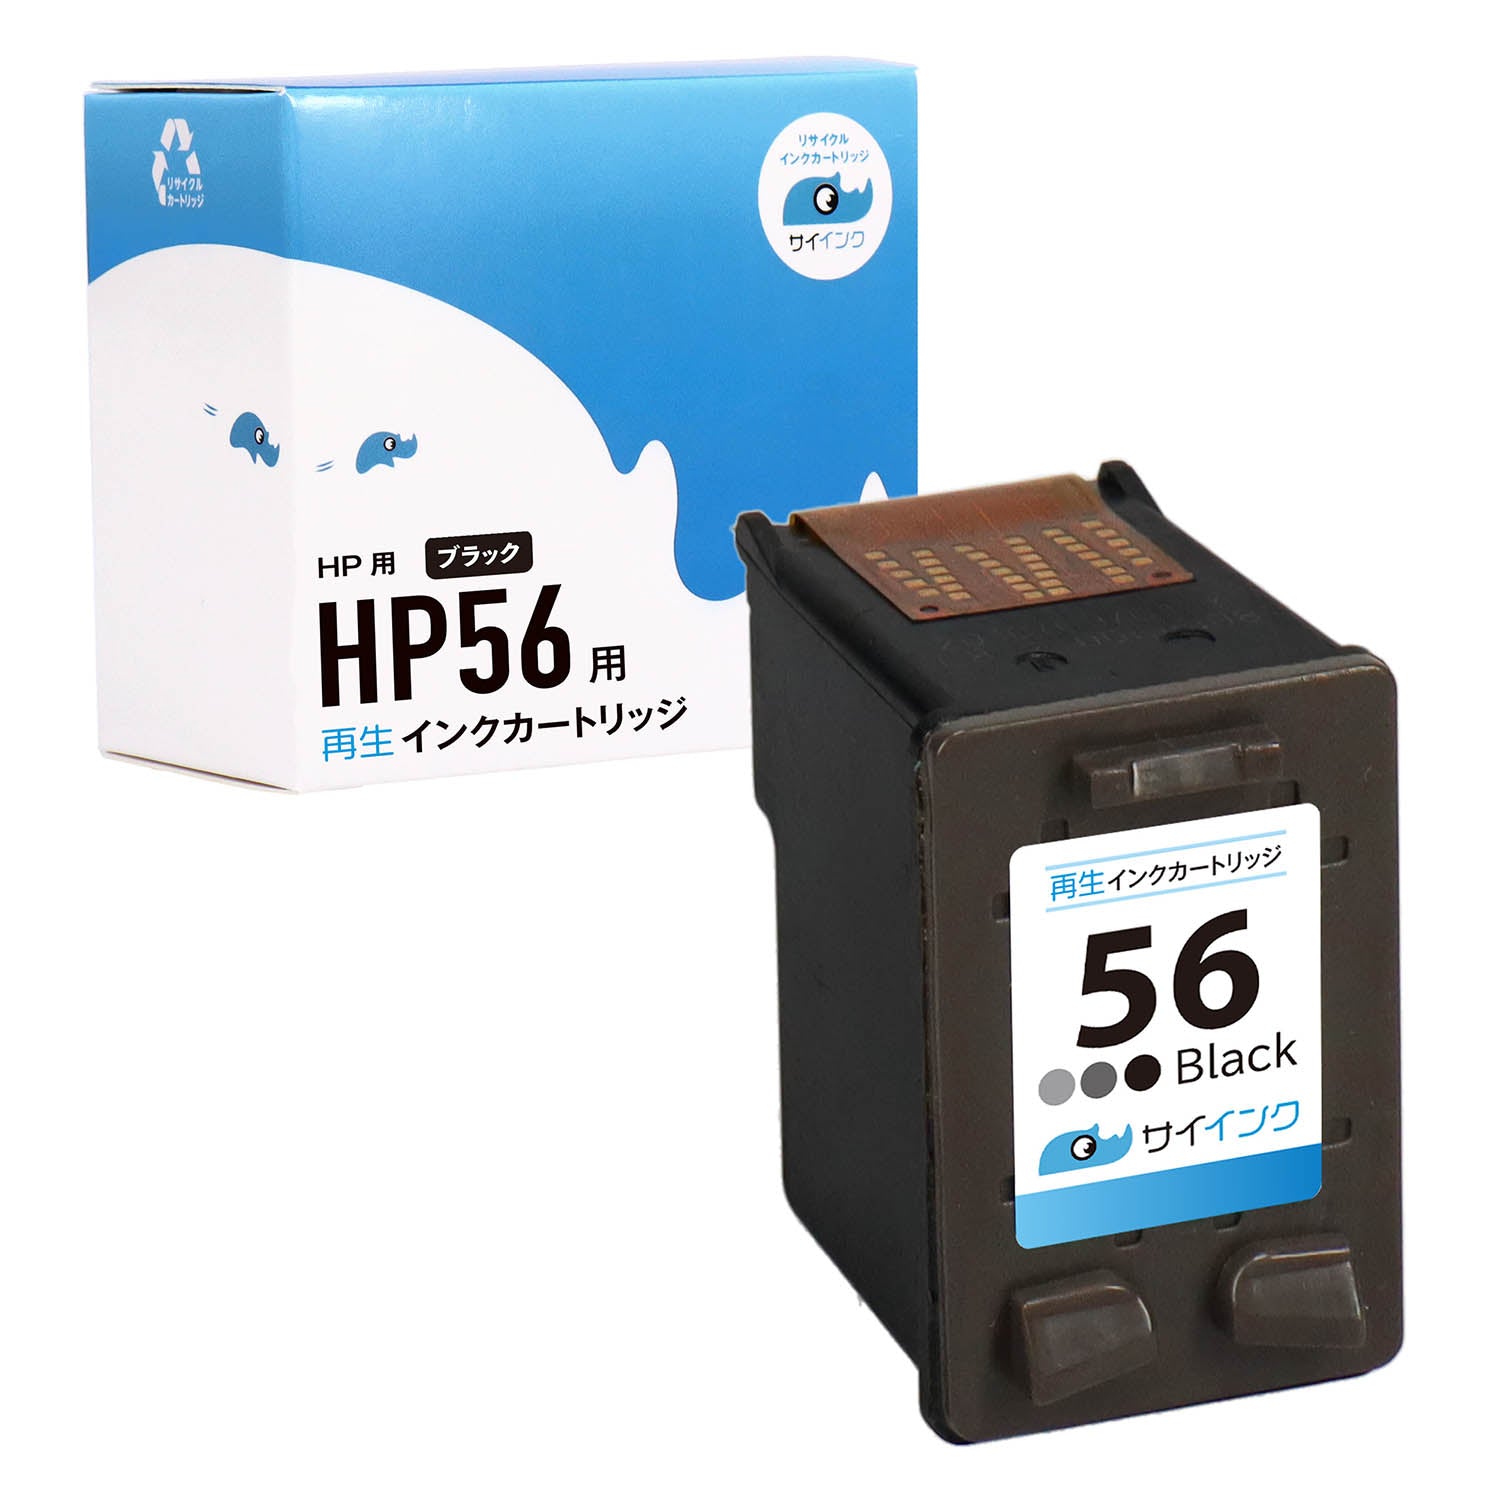 HP用 HP 56 再生インク ブラック ラージサイズ